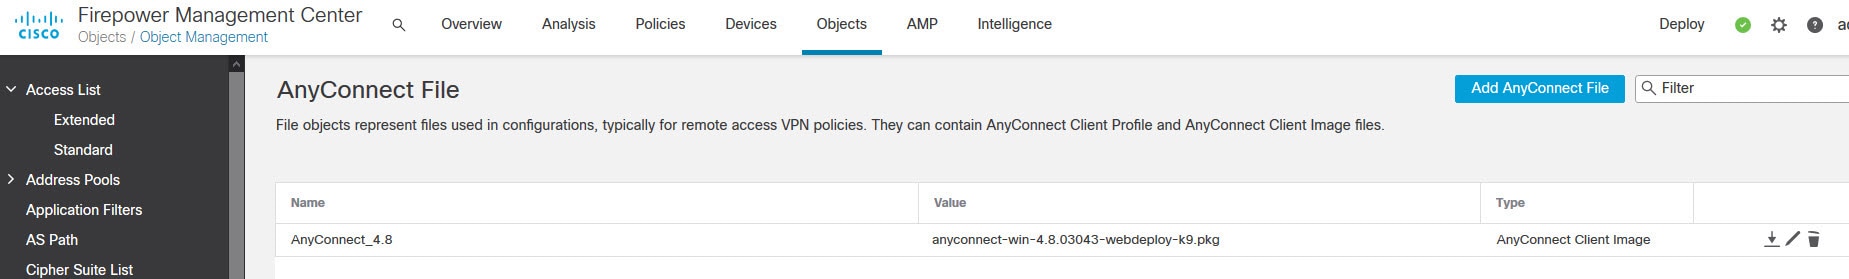 FMC AnyConnect SSL VPN